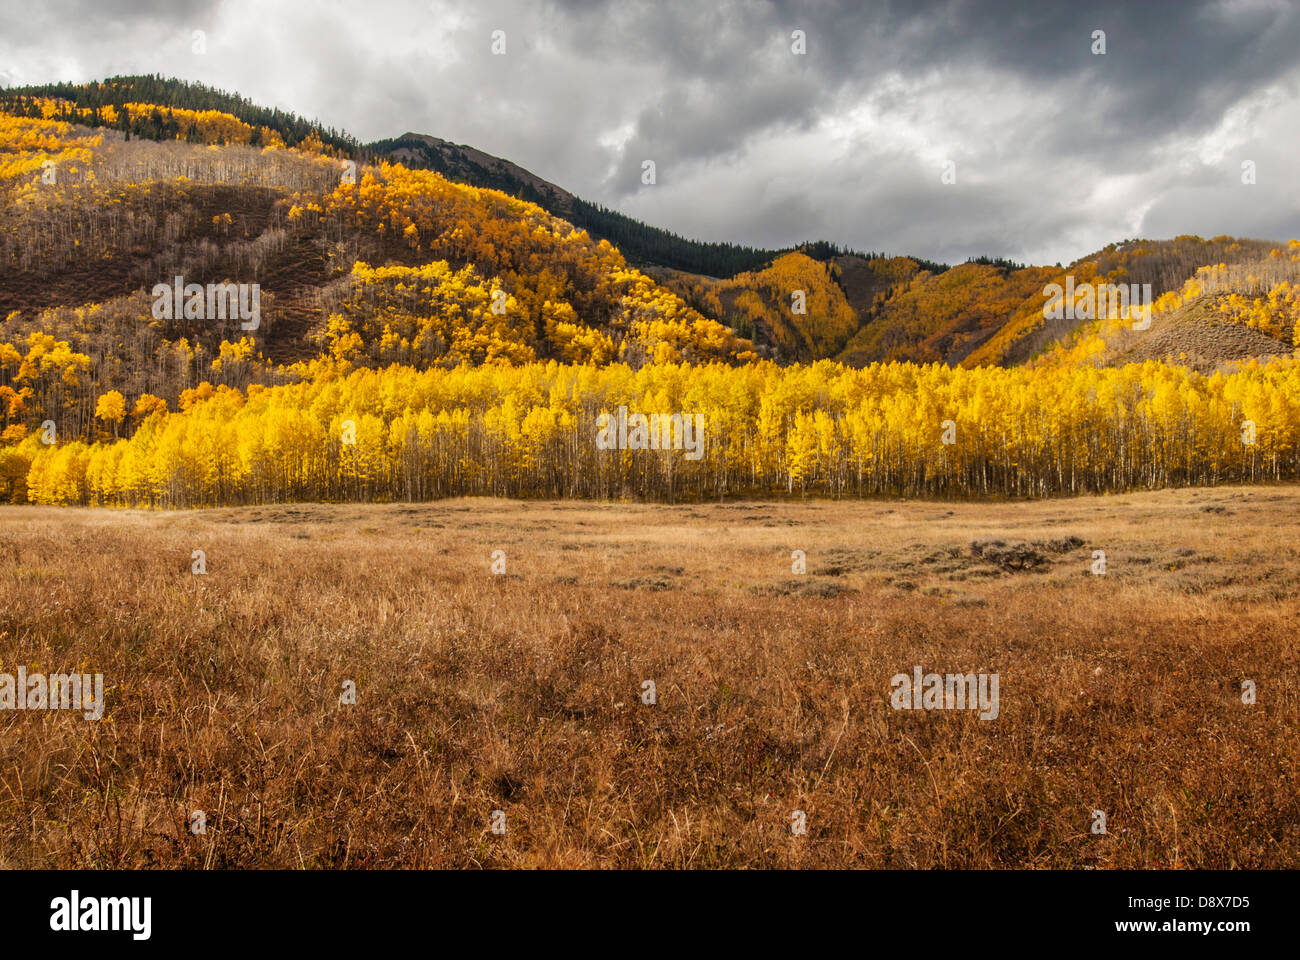 Aspen trees in Fall in a Colorado landscape Stock Photo